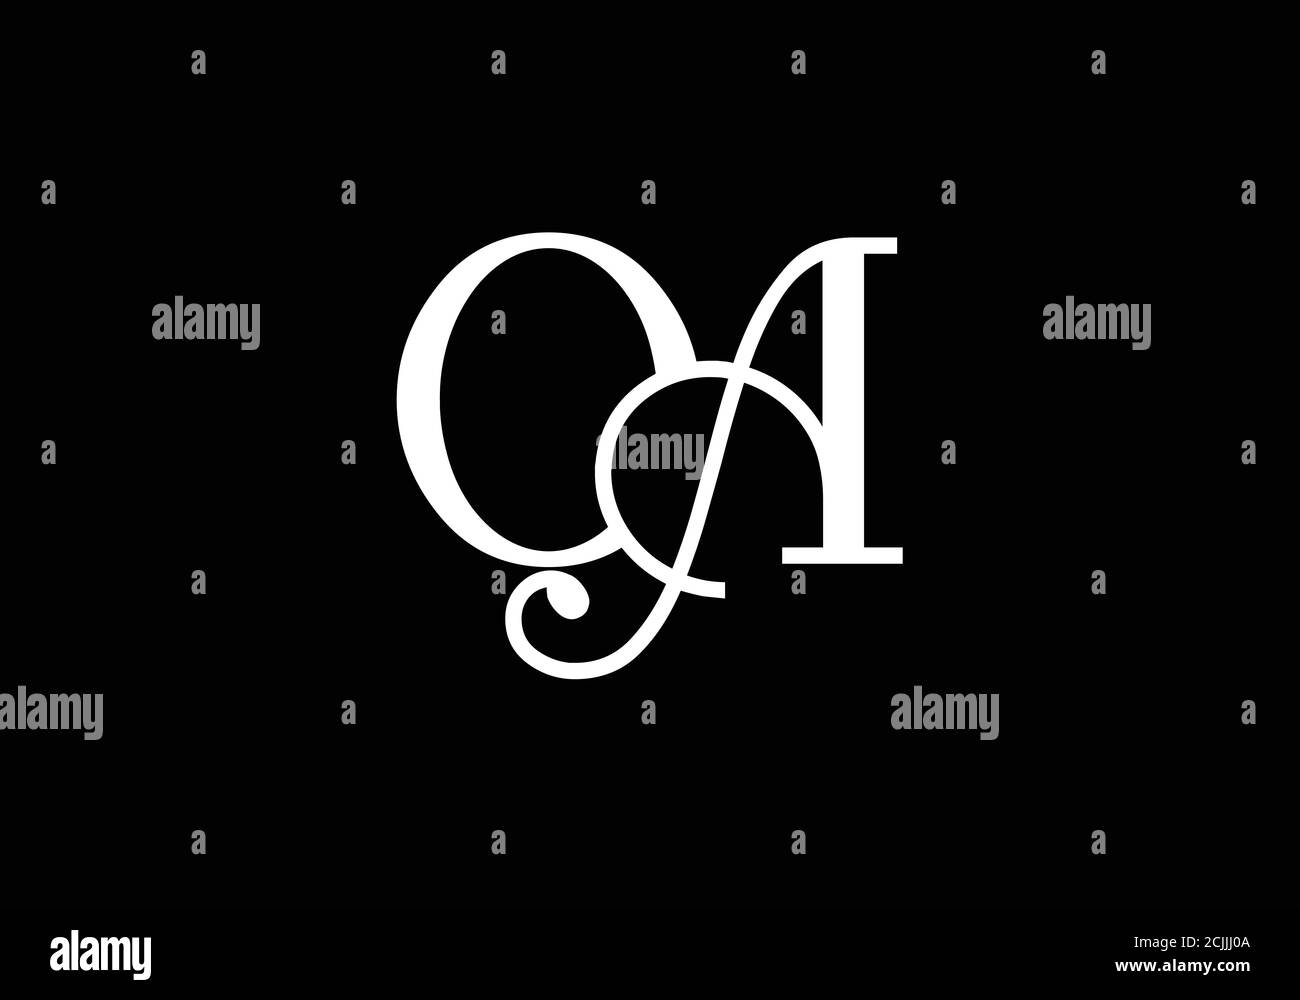 Initial Monogram Letter O A Logo Design Vector Template. O A Letter Logo Design Stock Vector